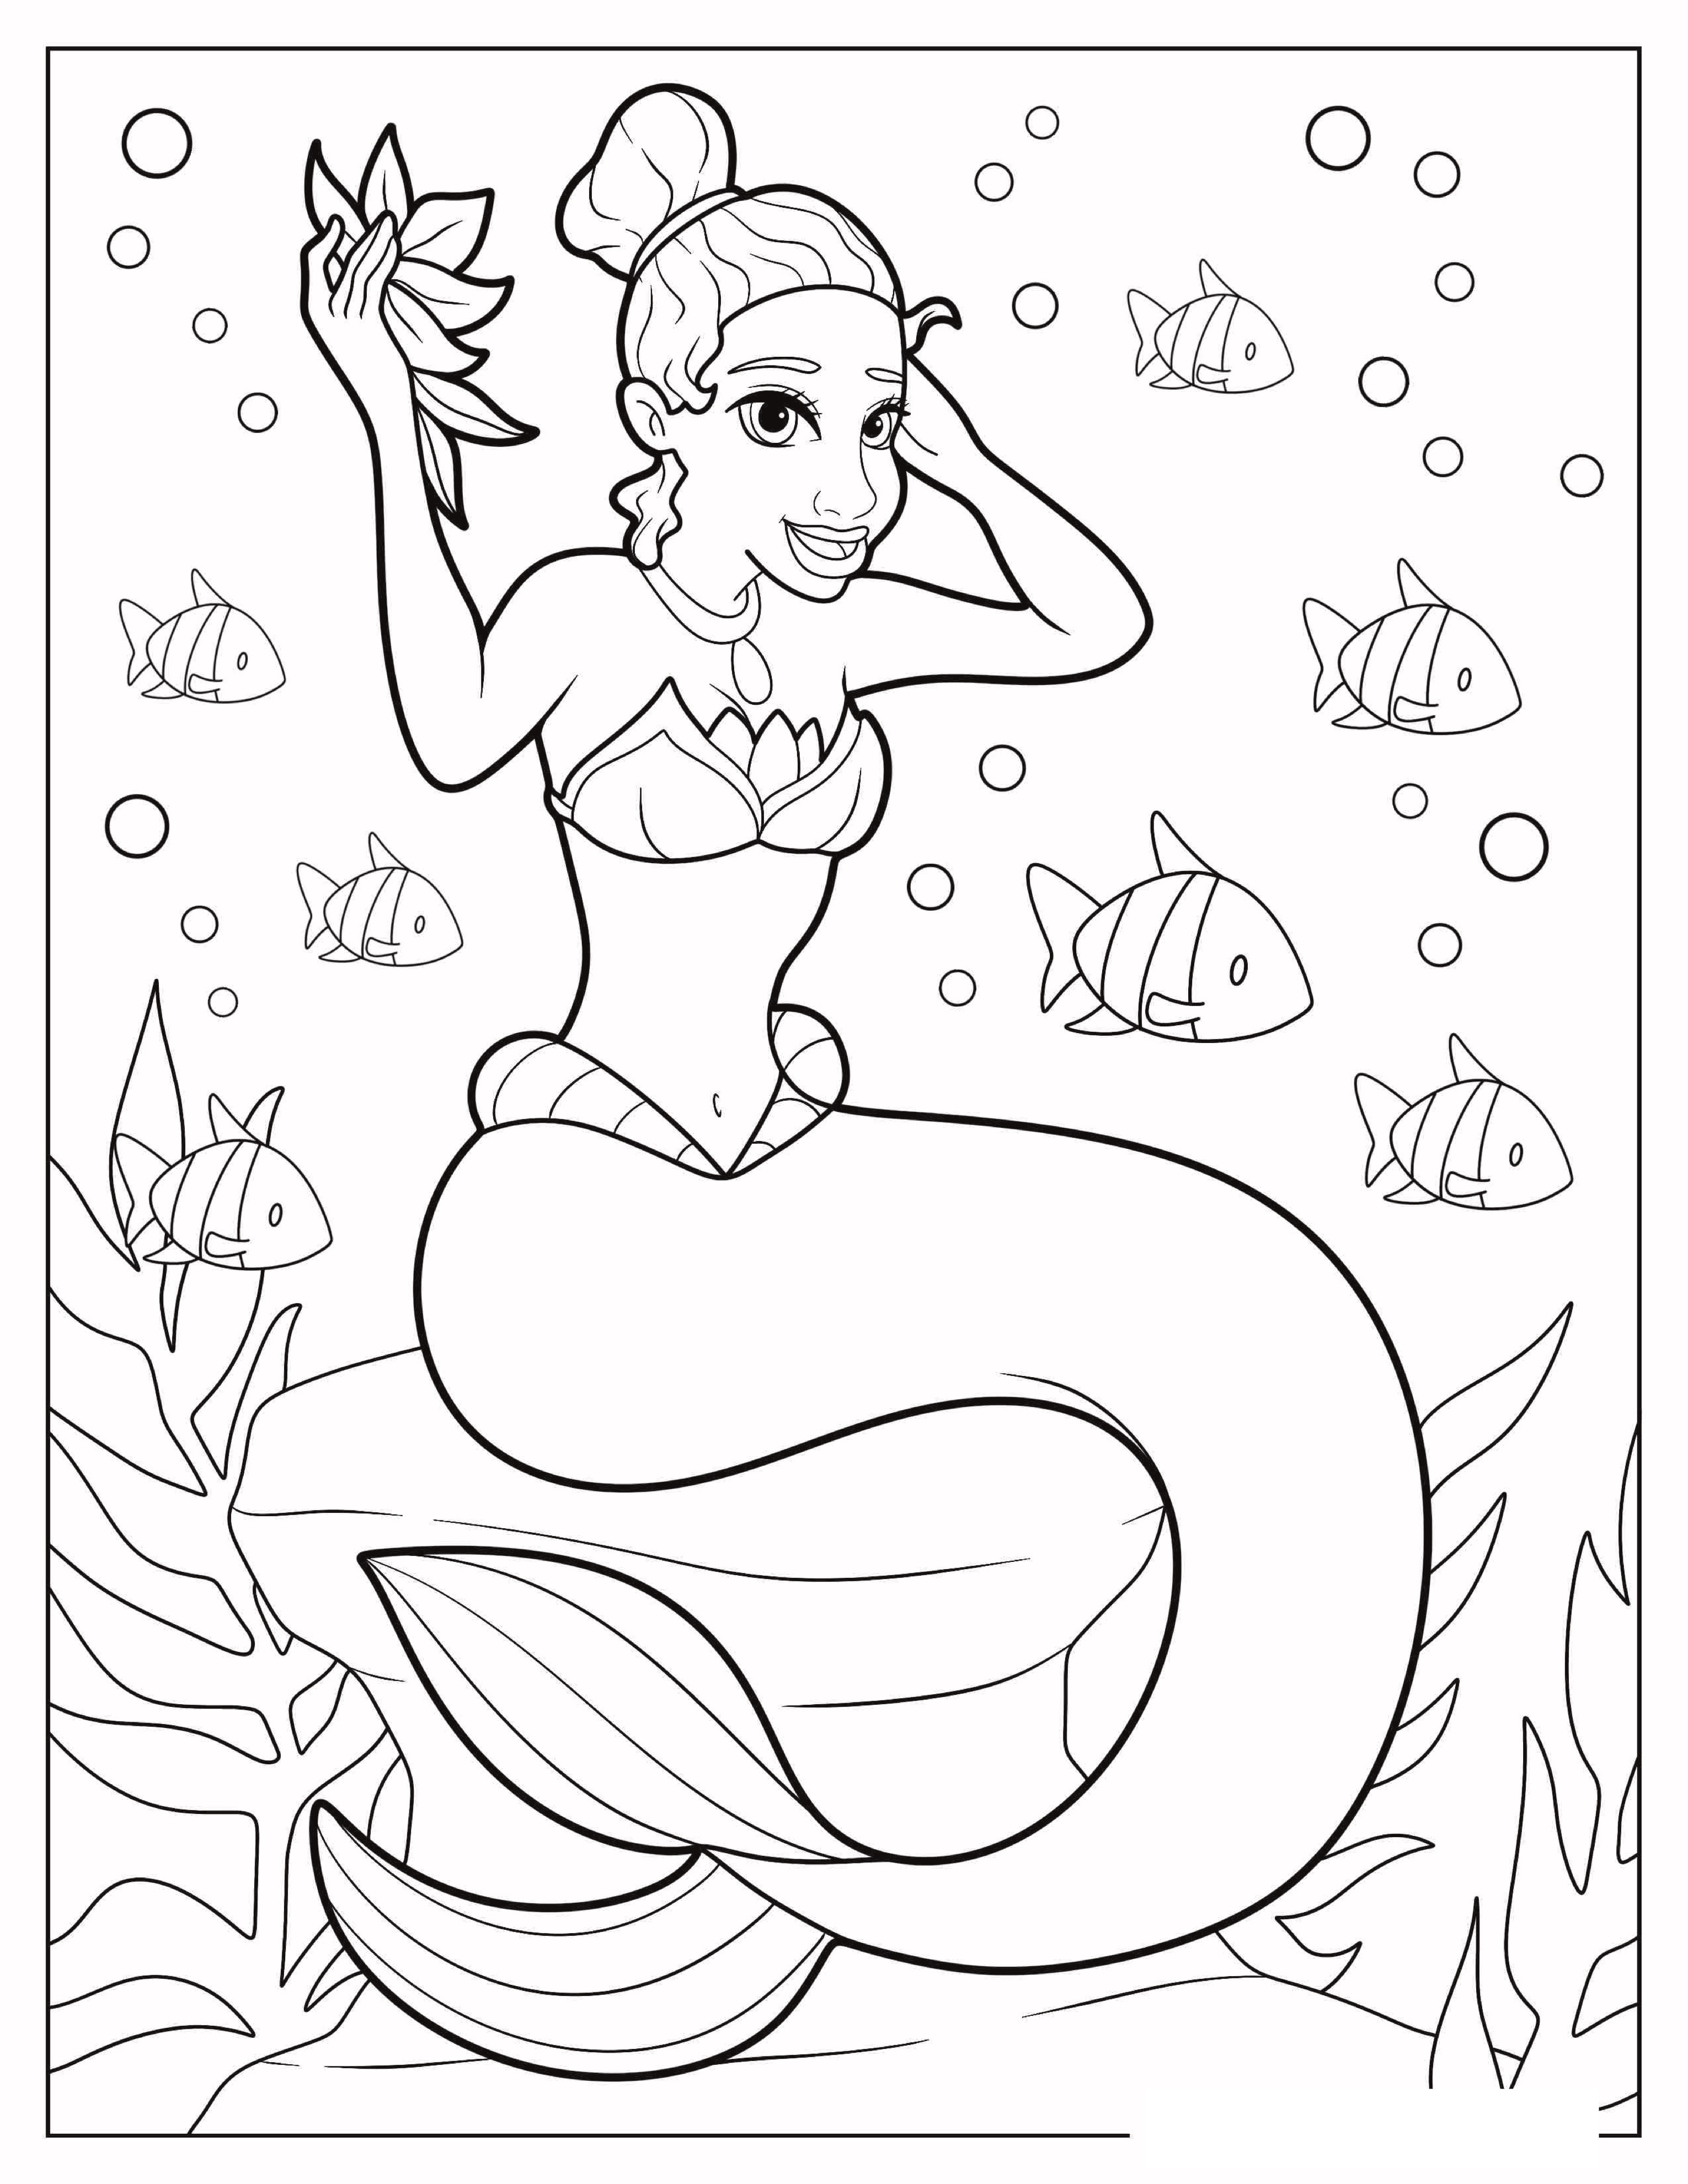 Mermaid-Princess-Tiana-Coloring-Page.jpg